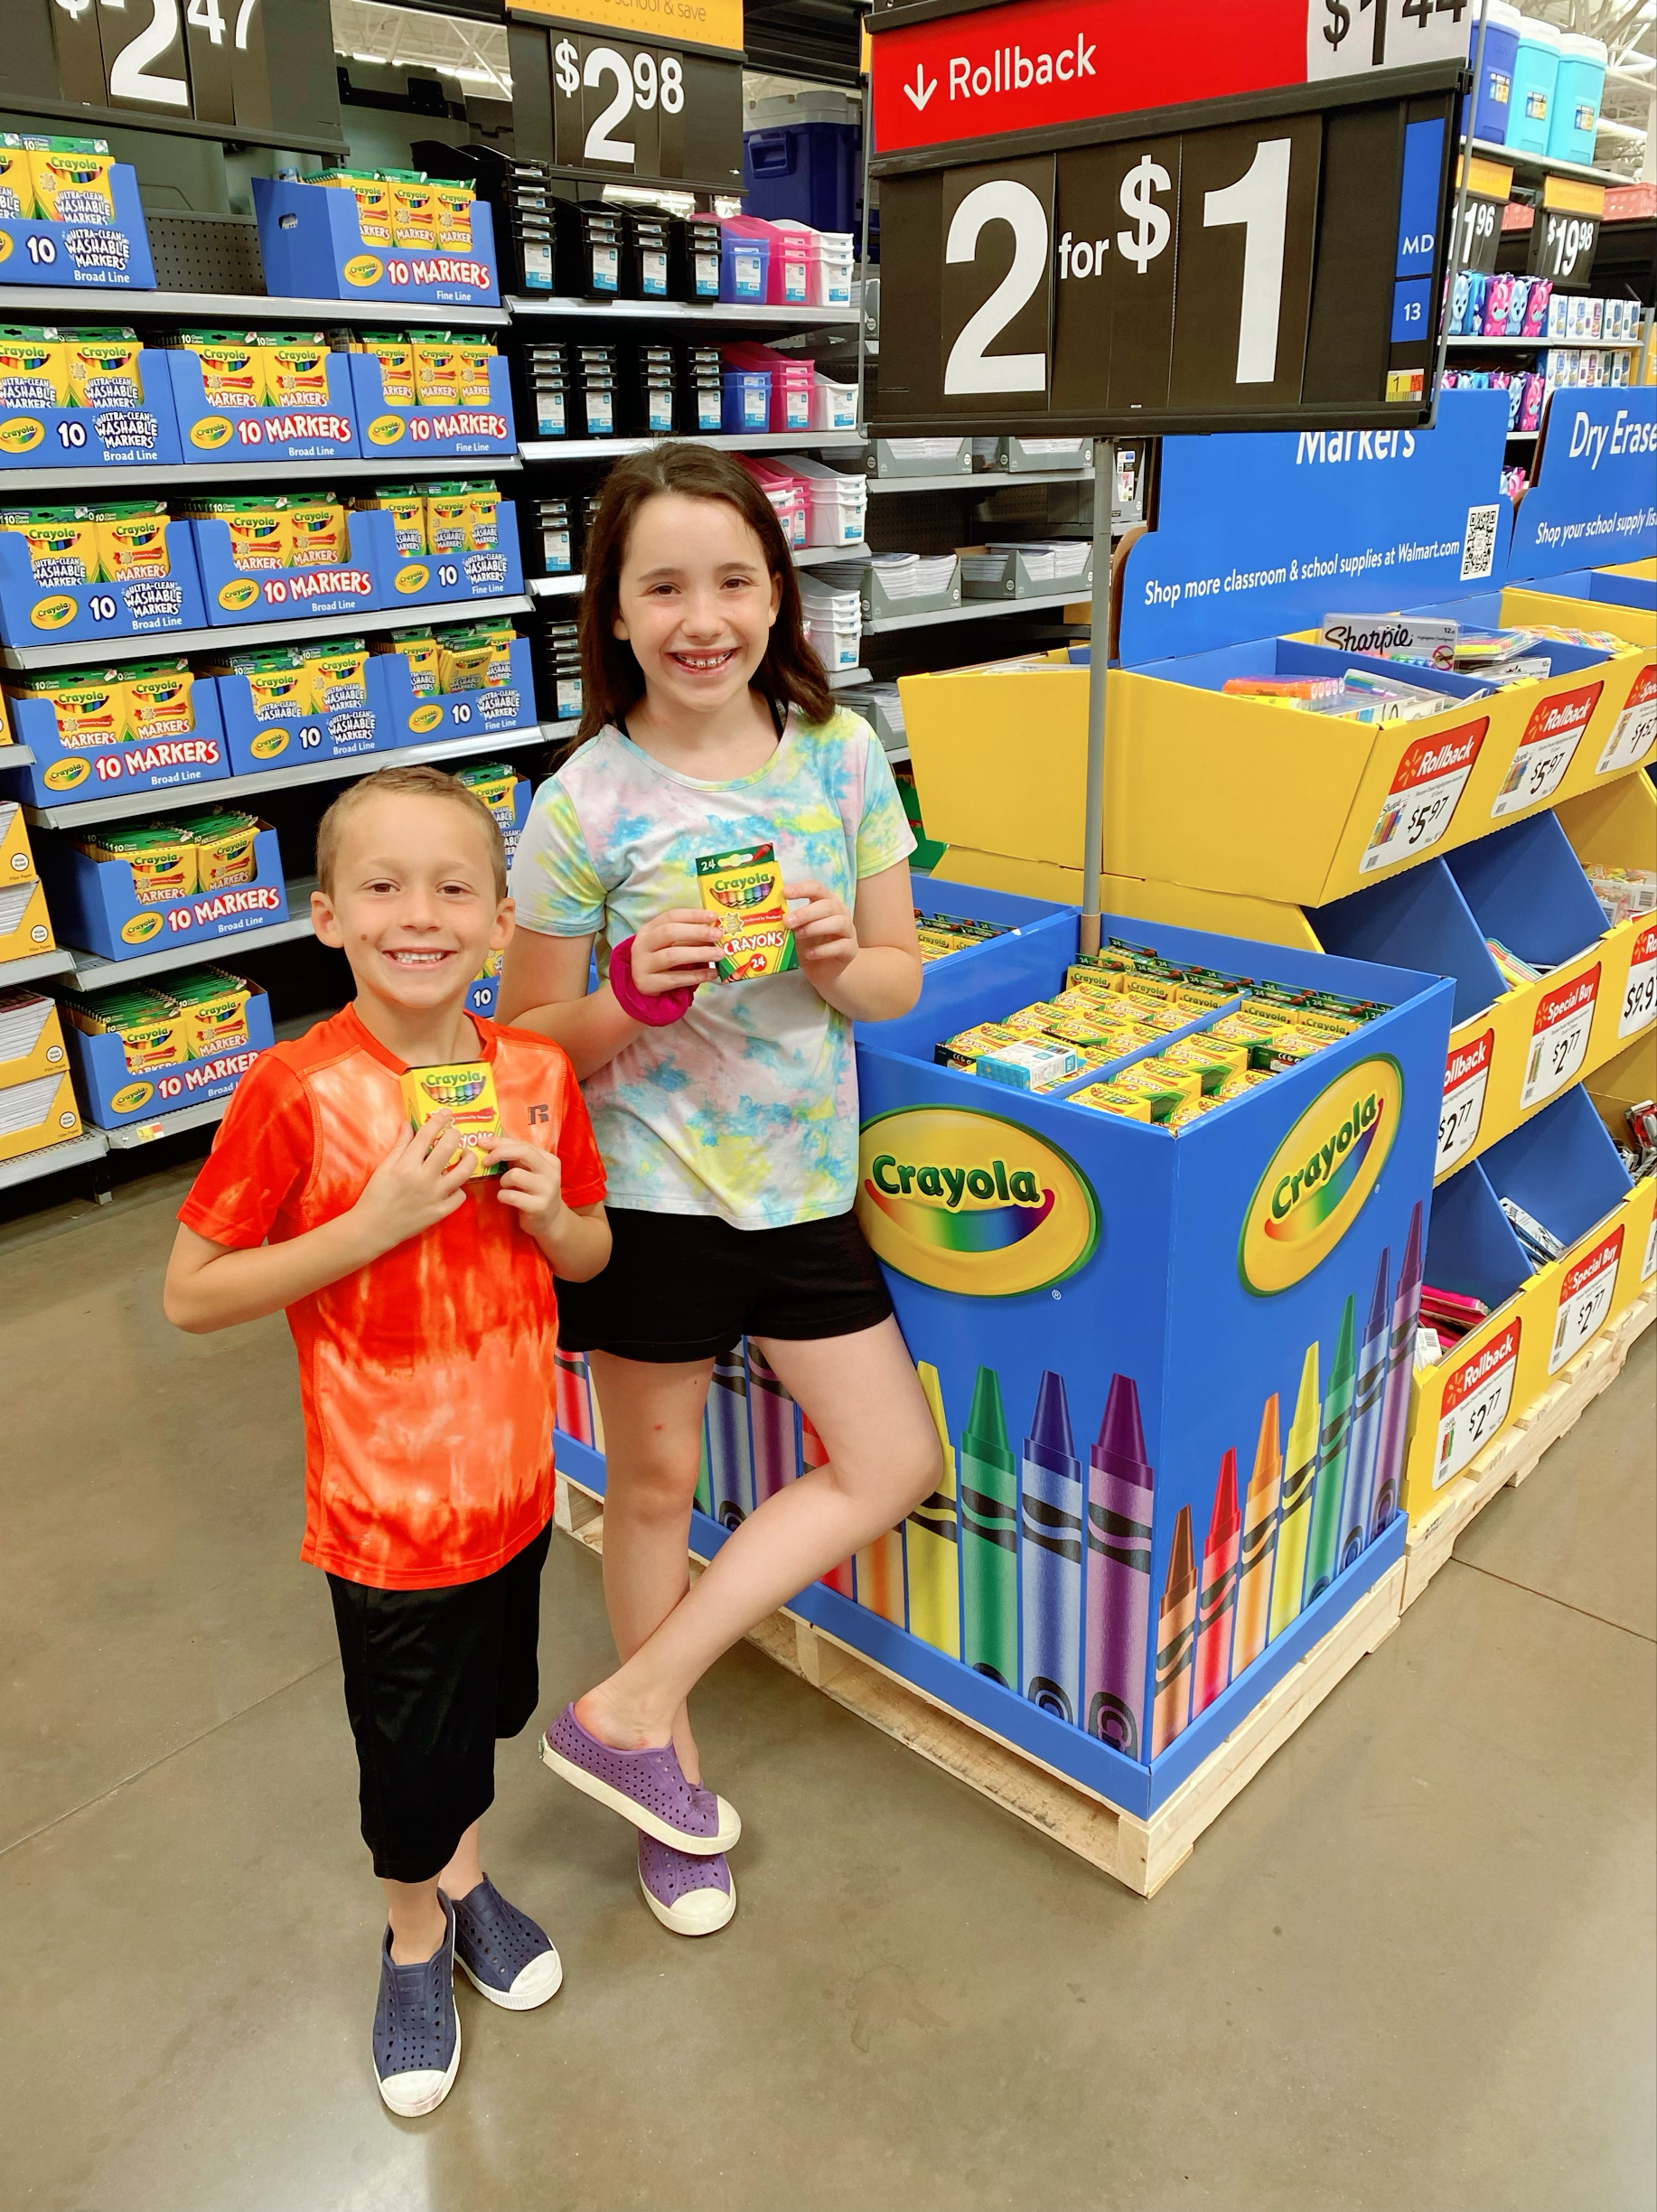 Walmart has 100+ school supplies under $1 